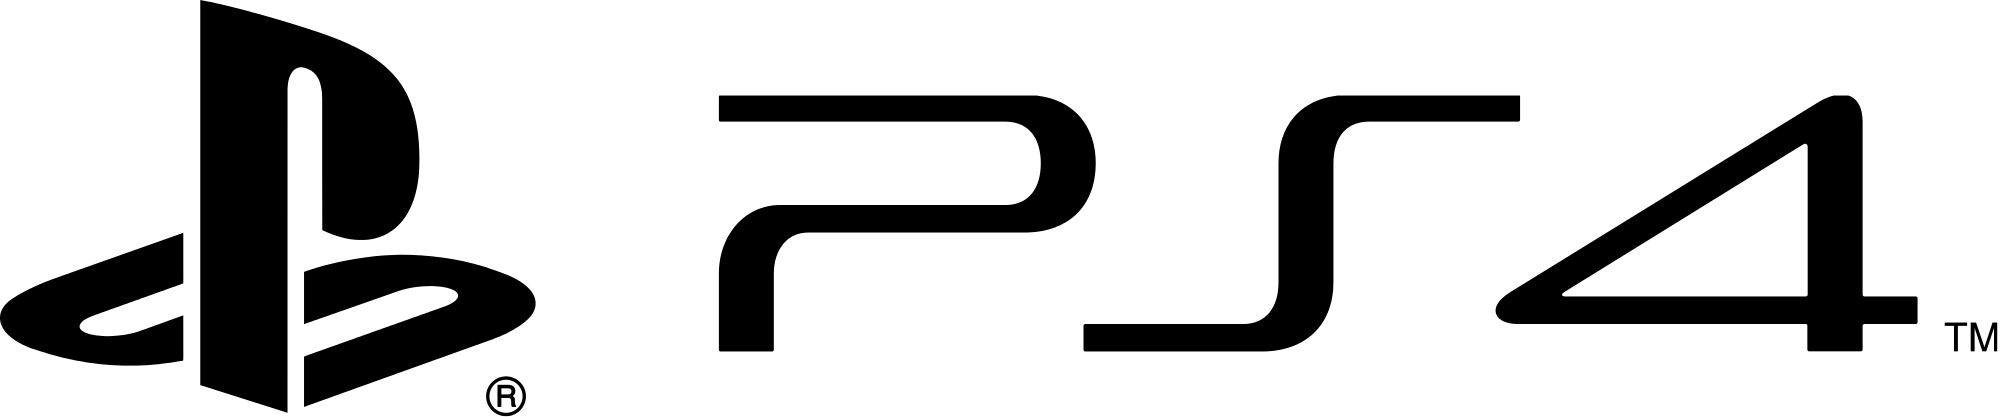 ps4_logo.png